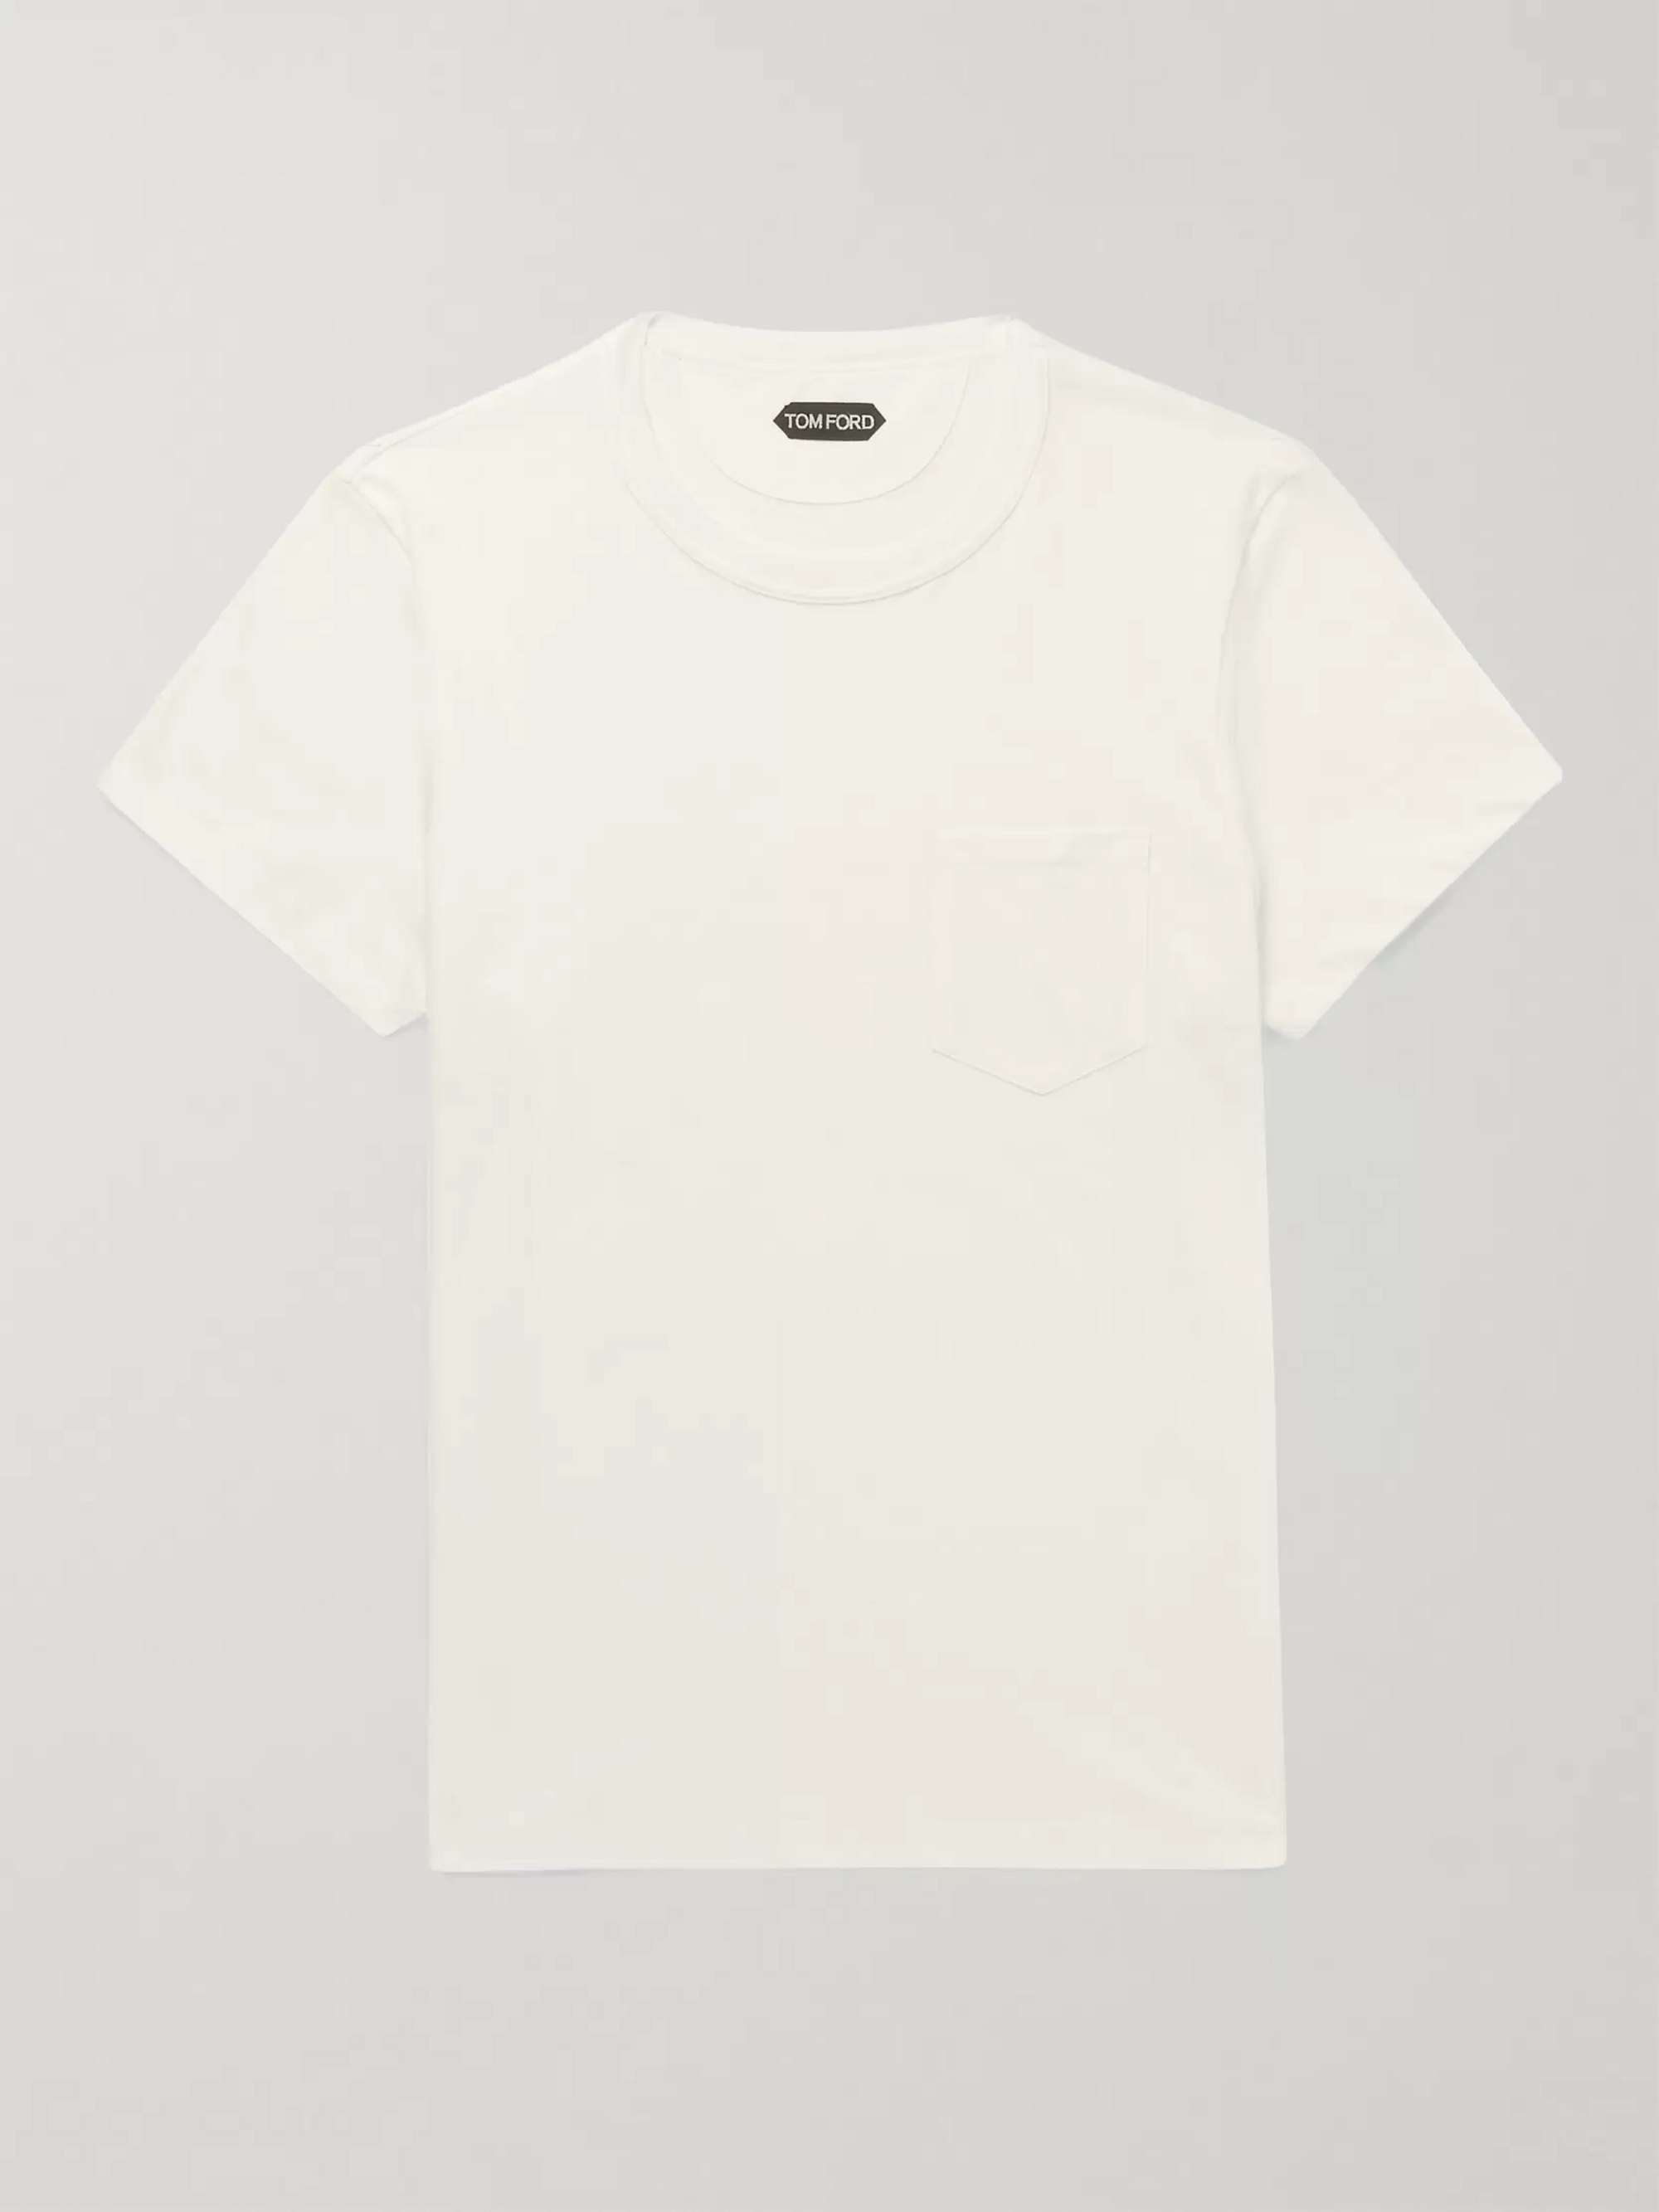 TOM FORD Cotton-Jersey T-Shirt | MR PORTER